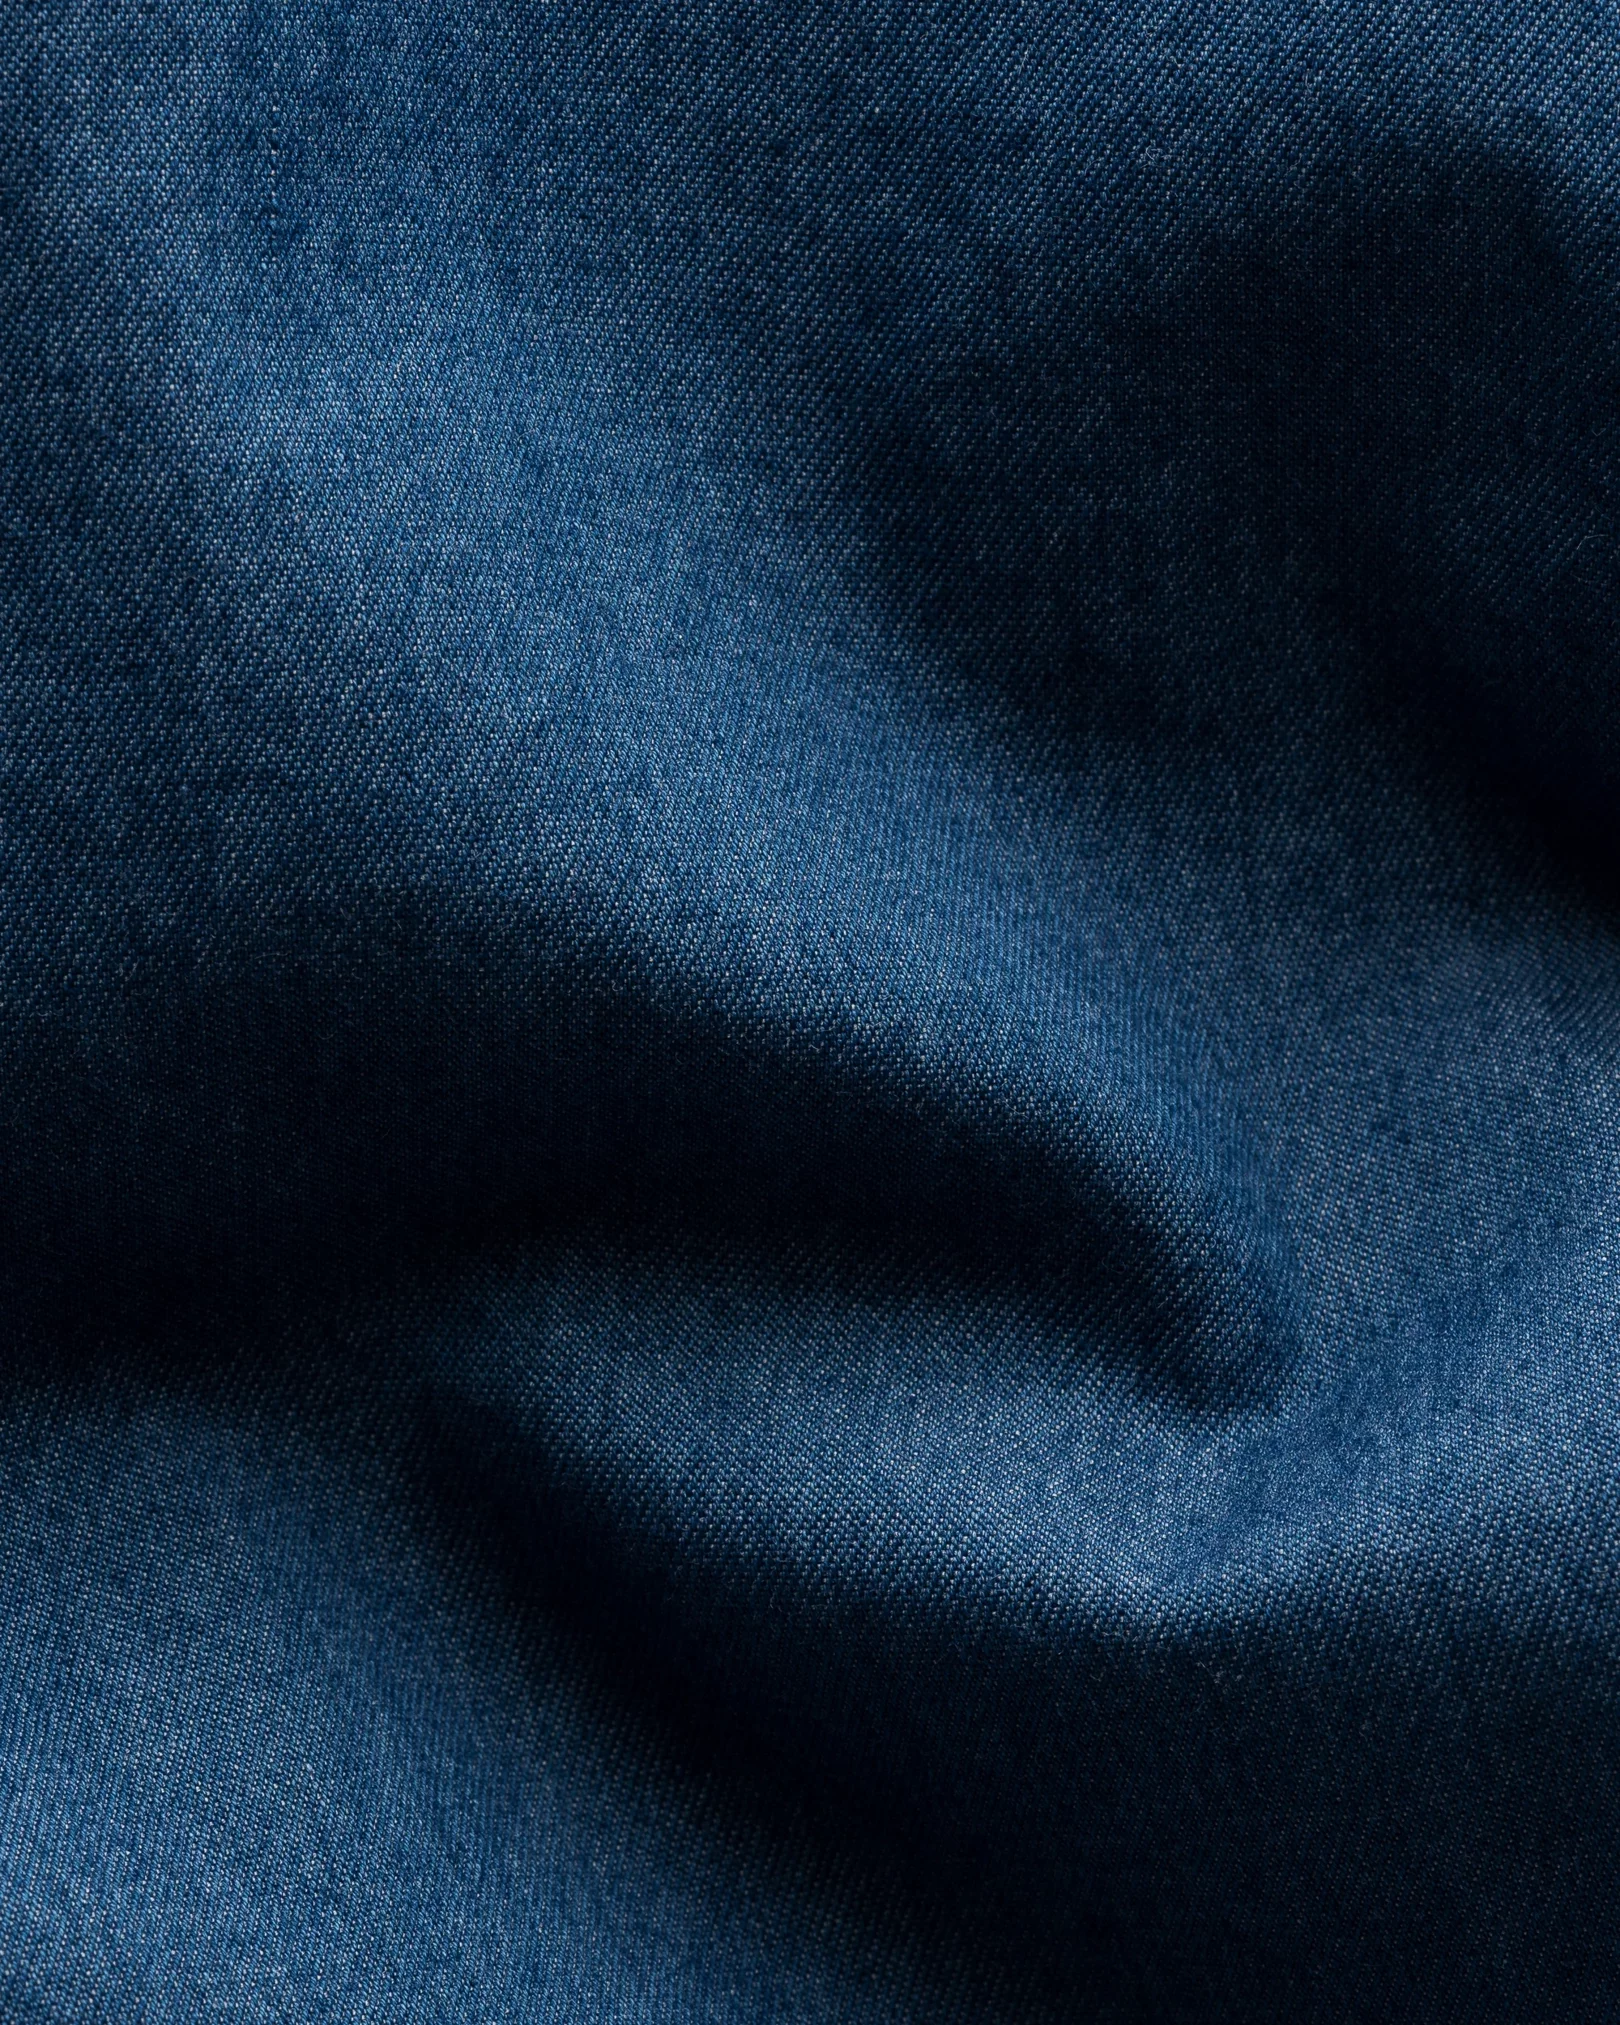 Eton - dark blue indigo shirt jacket